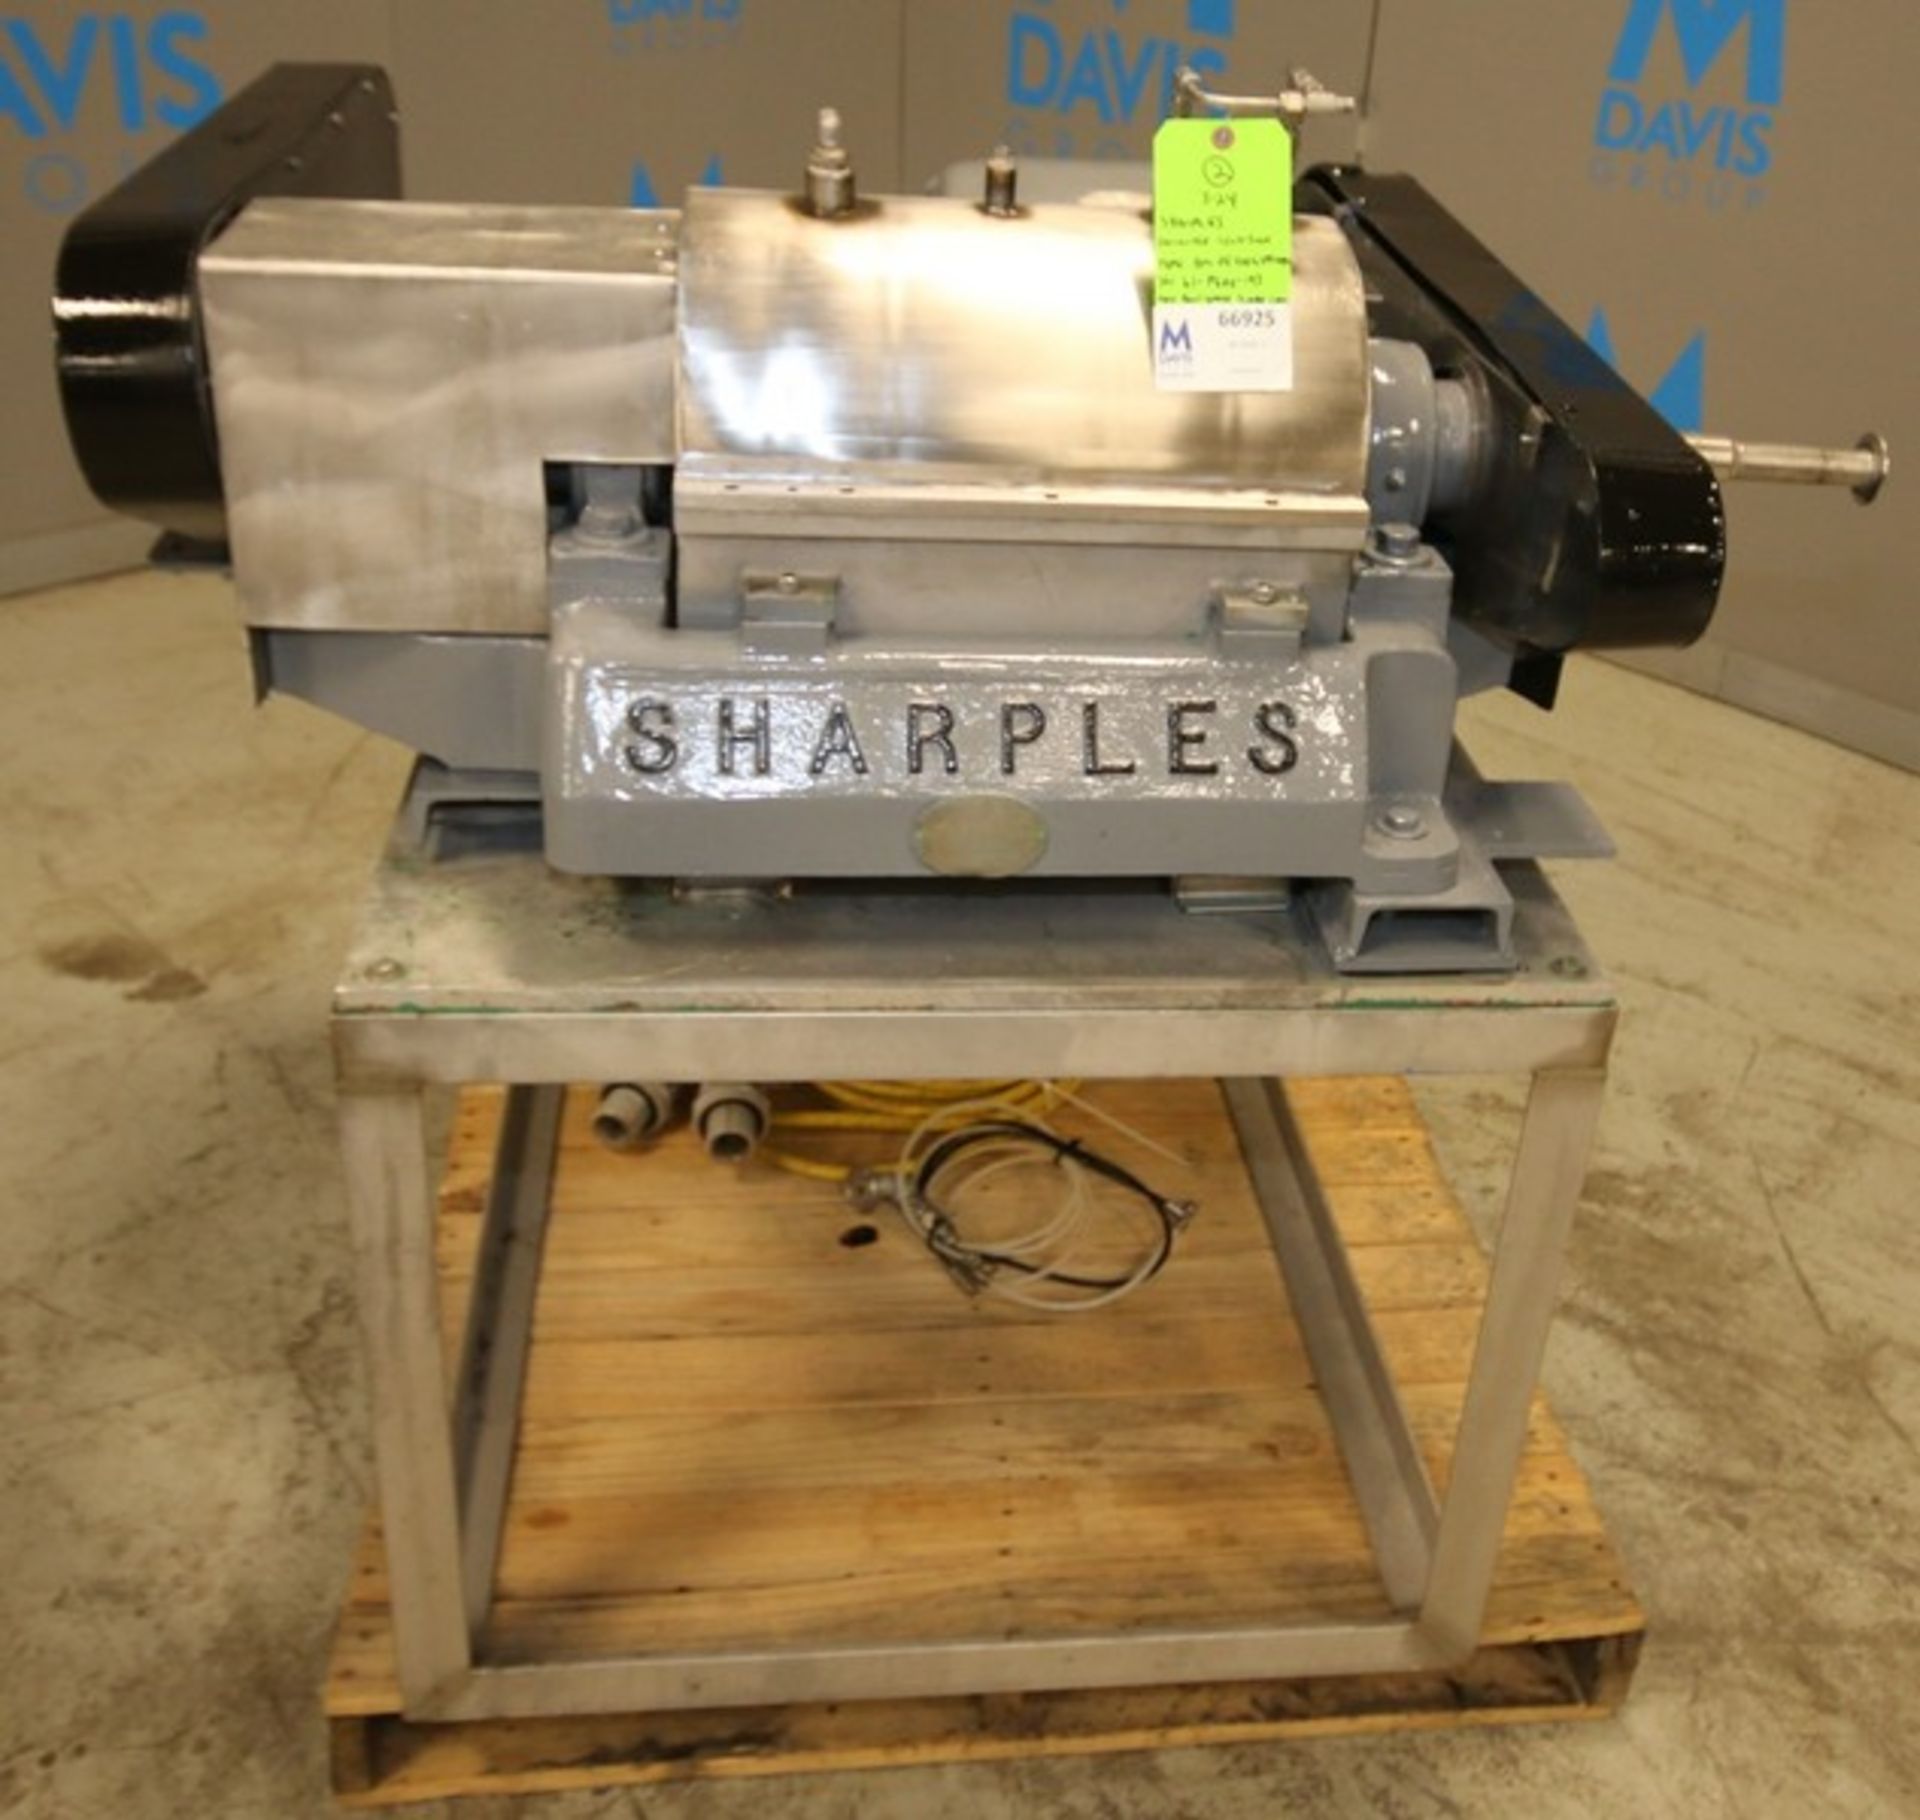 Sharples Decanter - Centrifuge, Type BM-PE40061PF449-1, SN 61-P600-193, Max Bowl Speed 5,000 rpm,